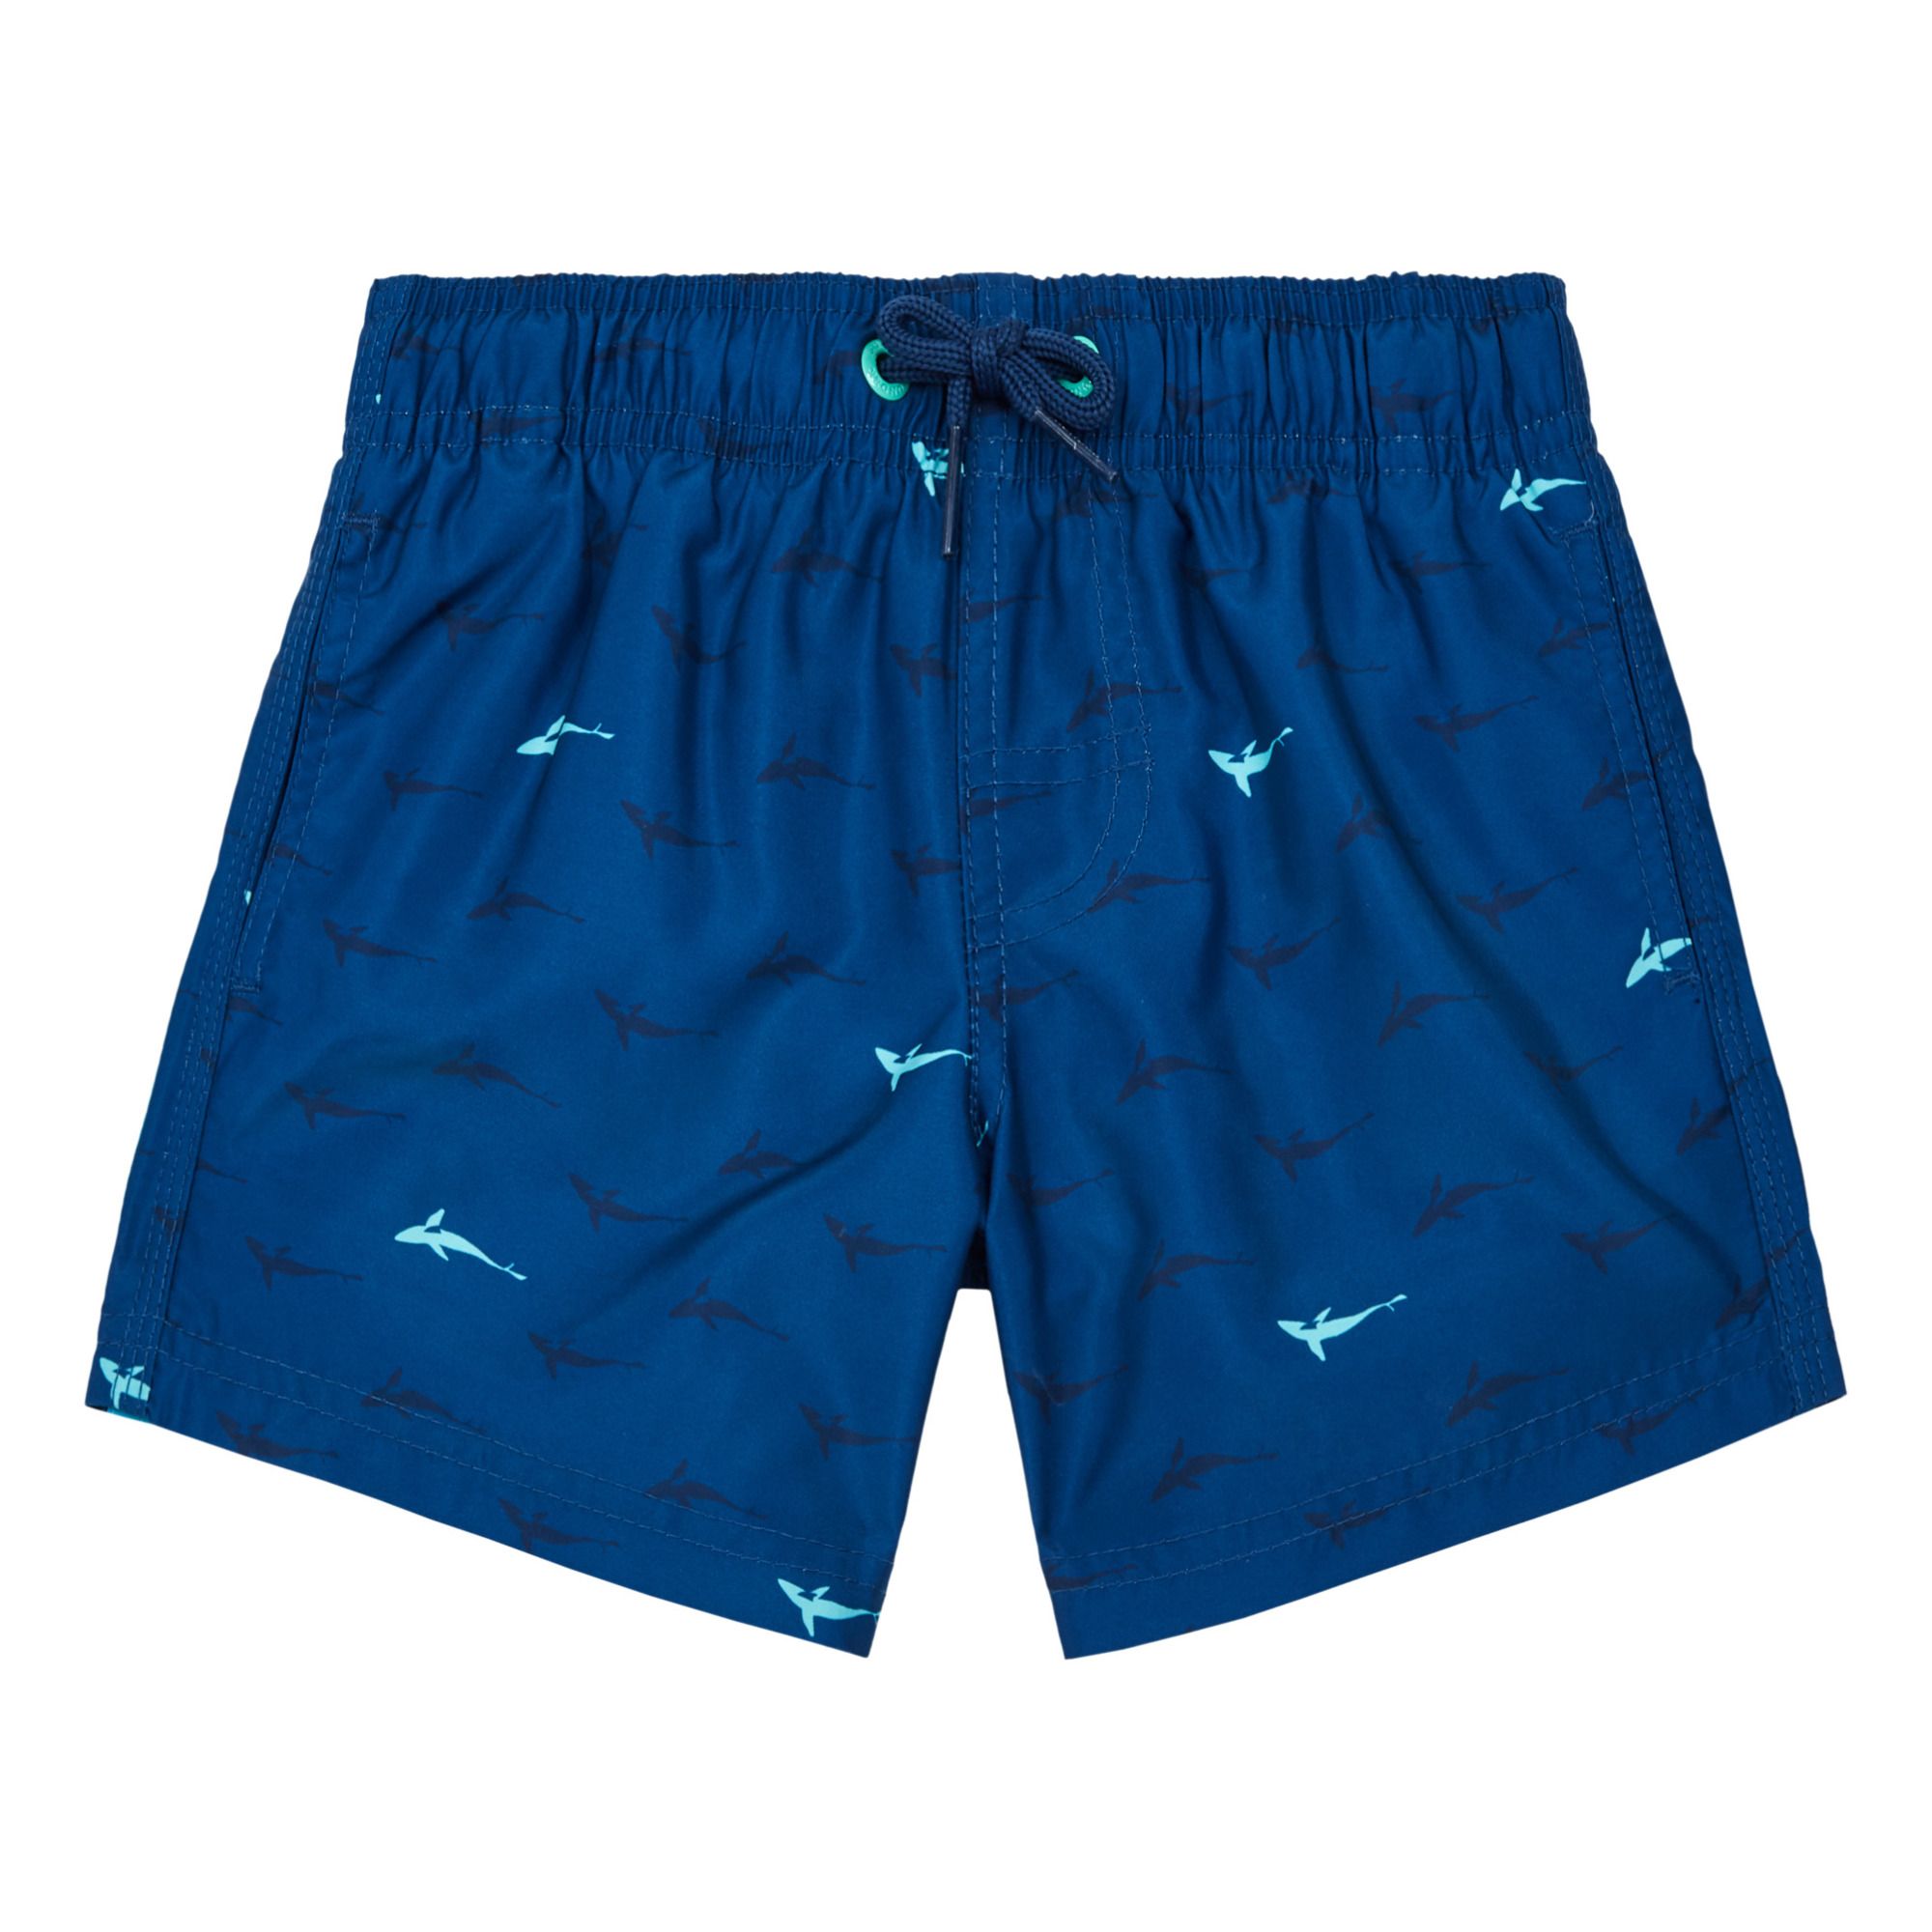 Sundek - Short de Bain Requins - Fille - Bleu marine